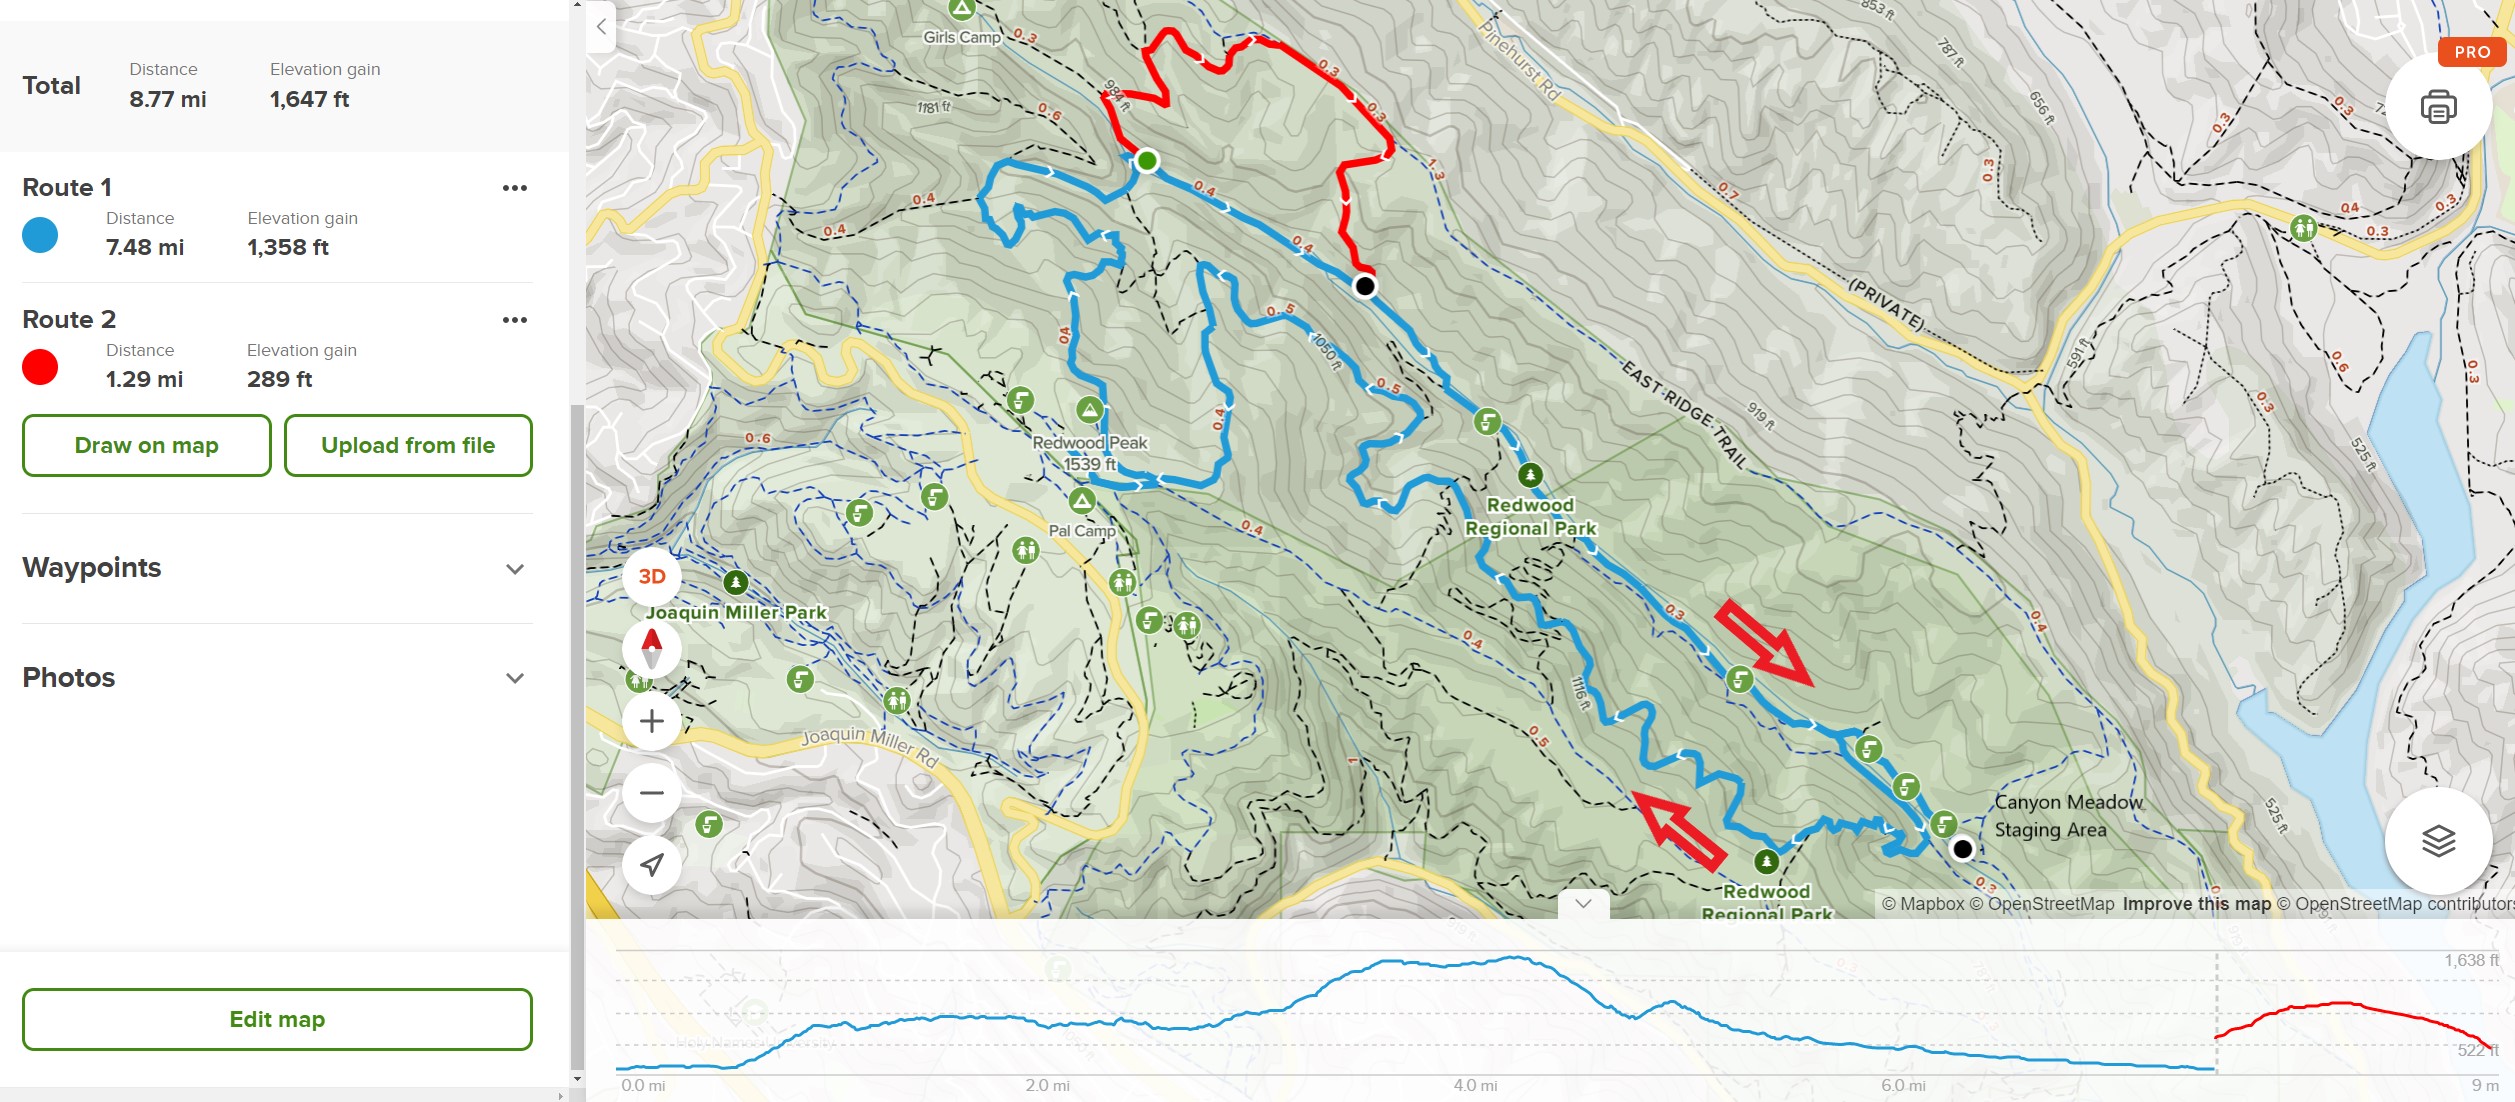 Redwood_Regional_Park_trail_map.jpg